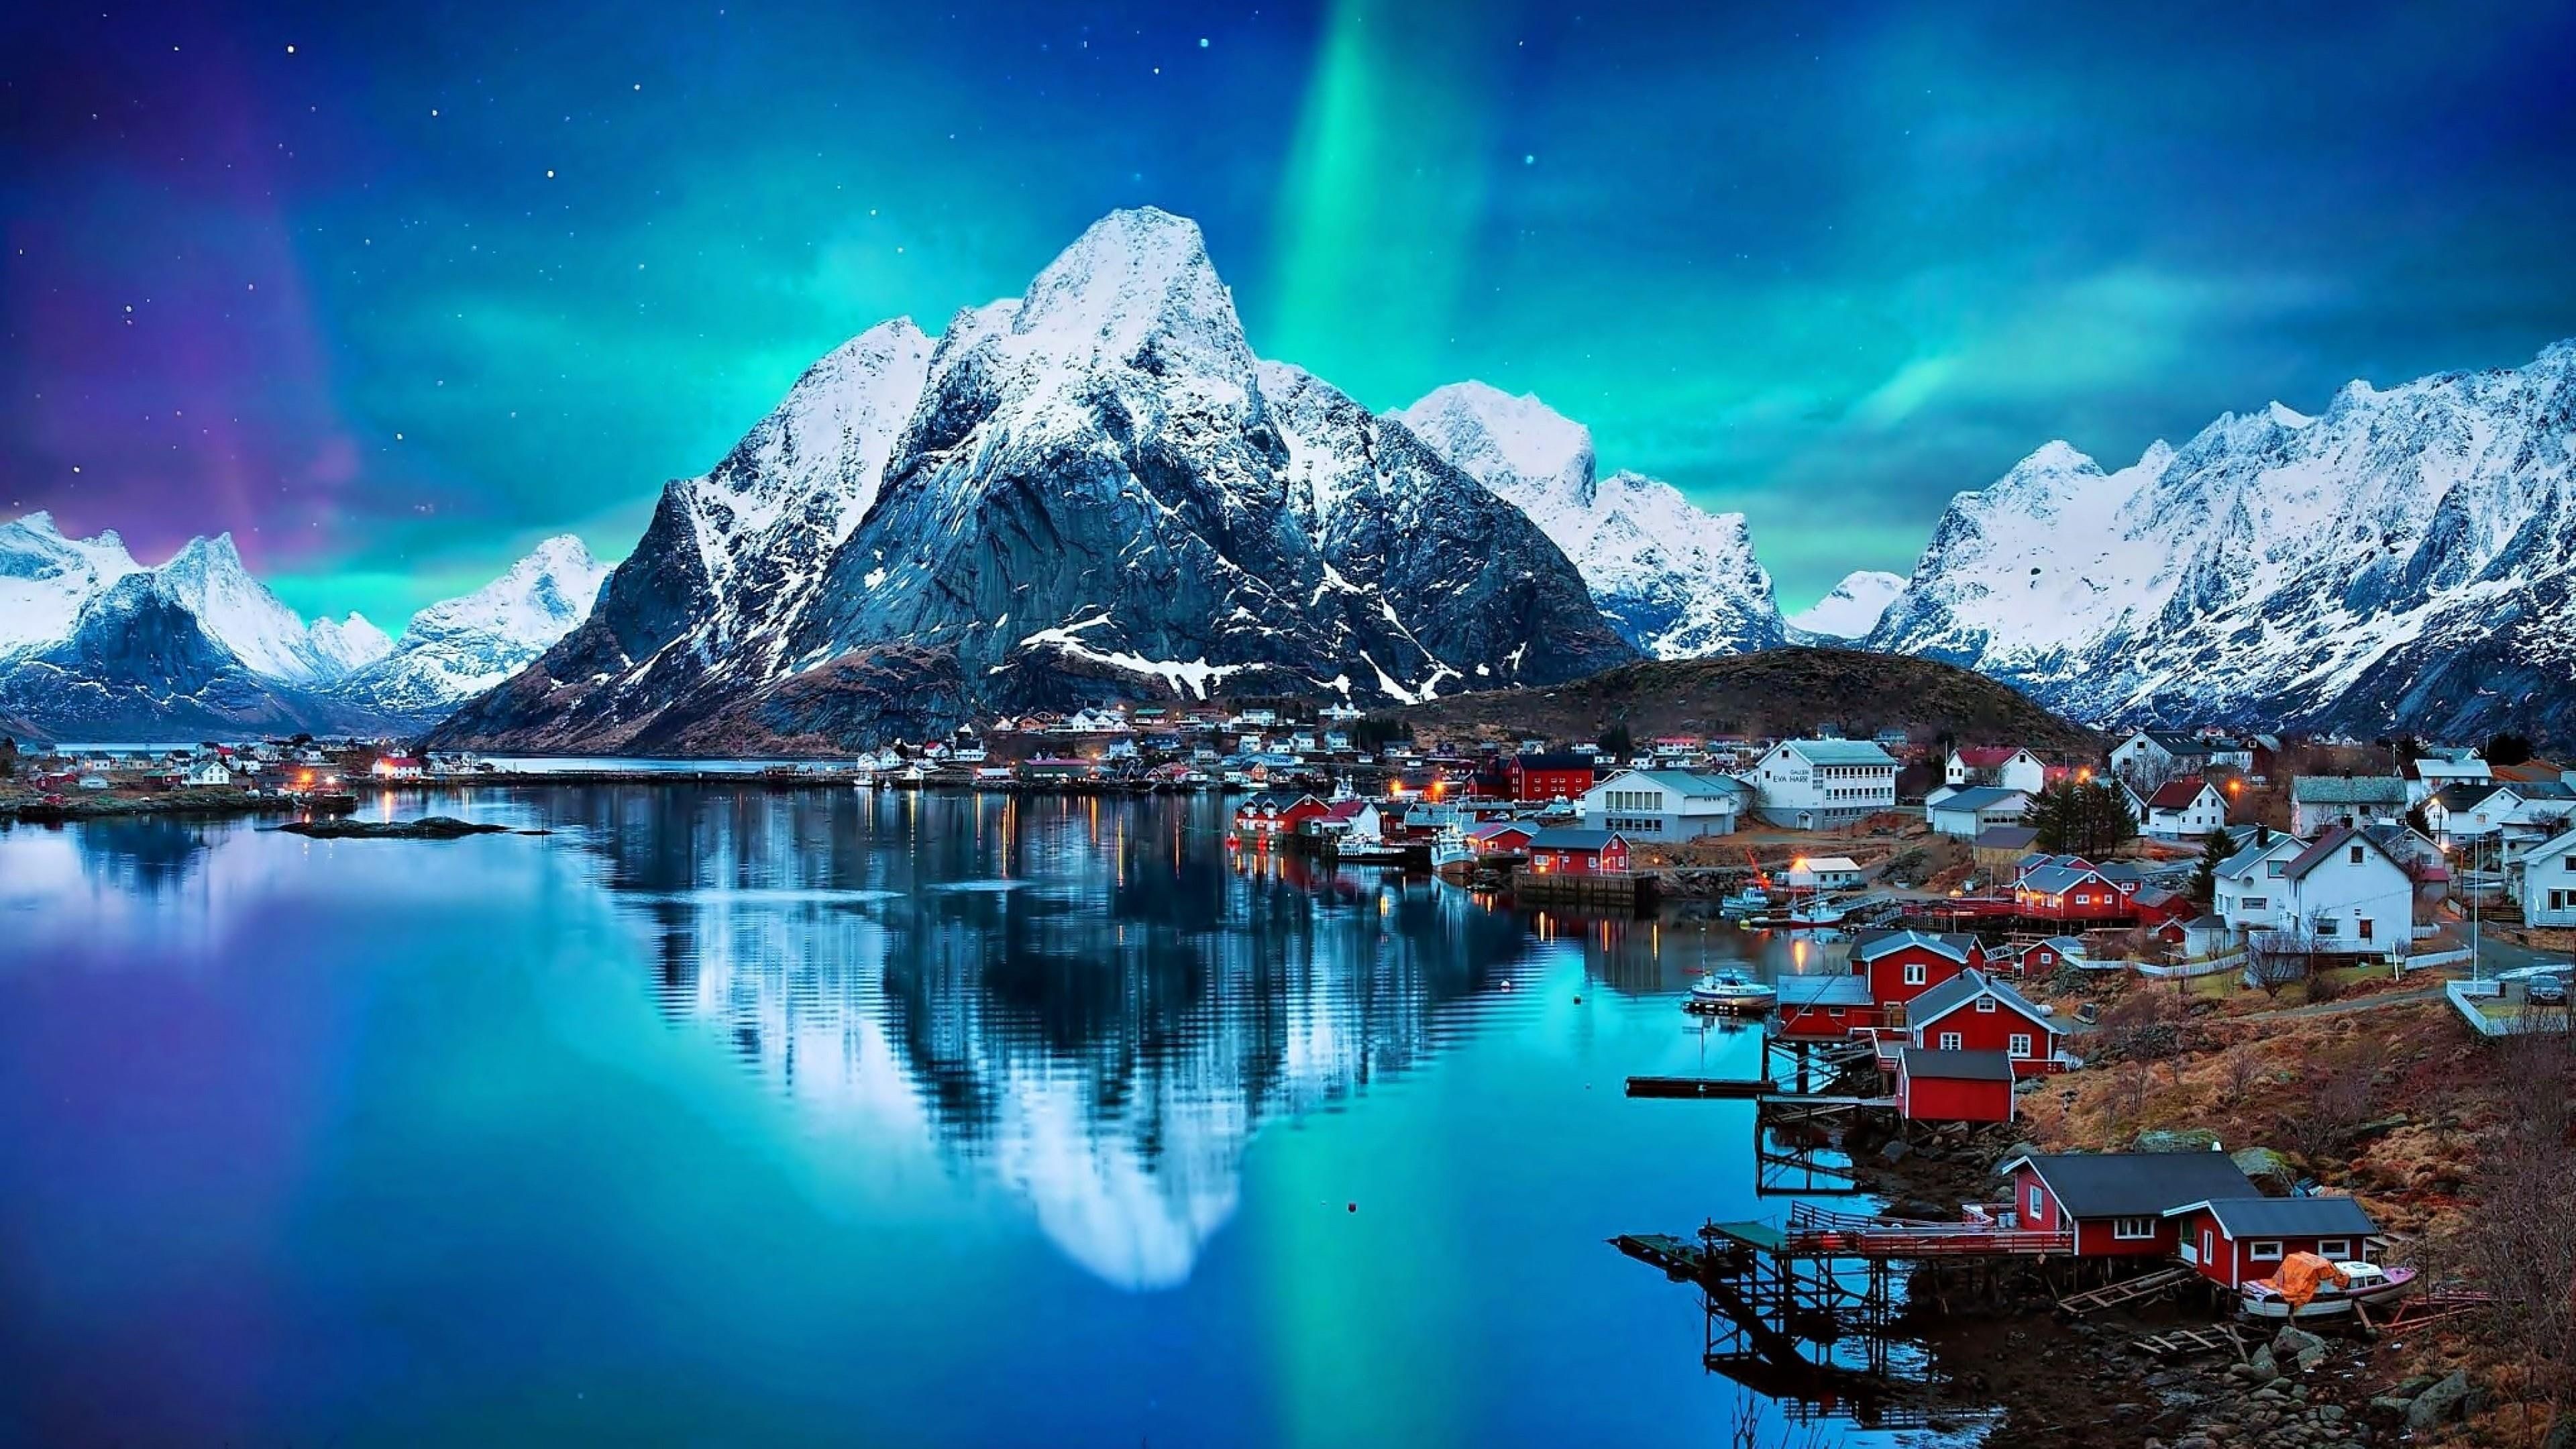 adventure night lights lofoten islands #snow #stars night sky #houses #mirror #reflection bucket. Norway wallpaper, Nature desktop wallpaper, Night sky wallpaper